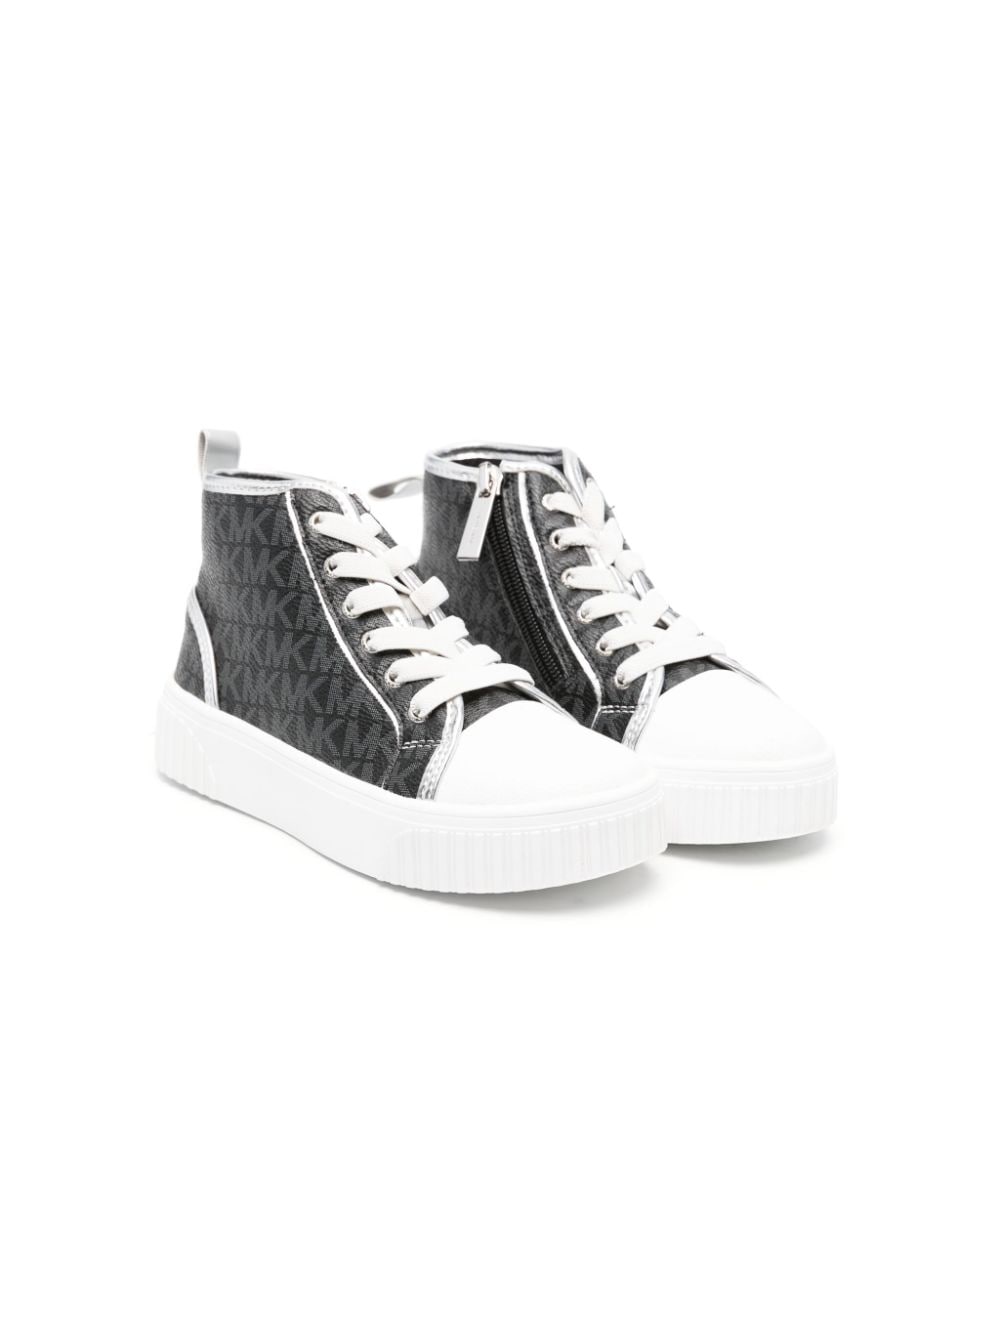 MICHAEL KORS: shoes for boys - Black  Michael Kors shoes MK100135 online  at